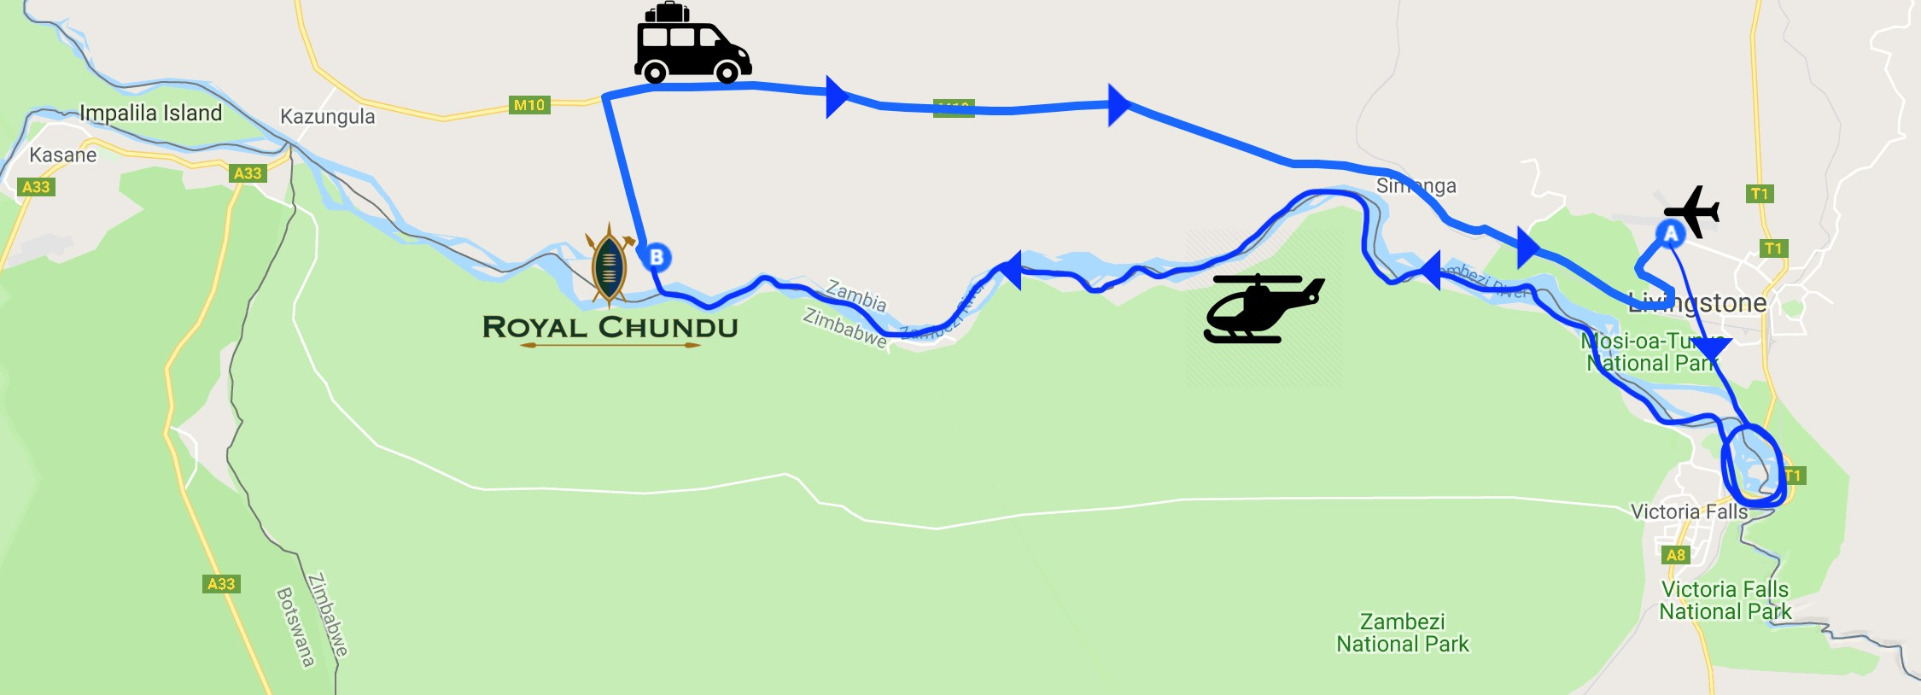 Road Transfer from Kasane Airport to Royal Chundu